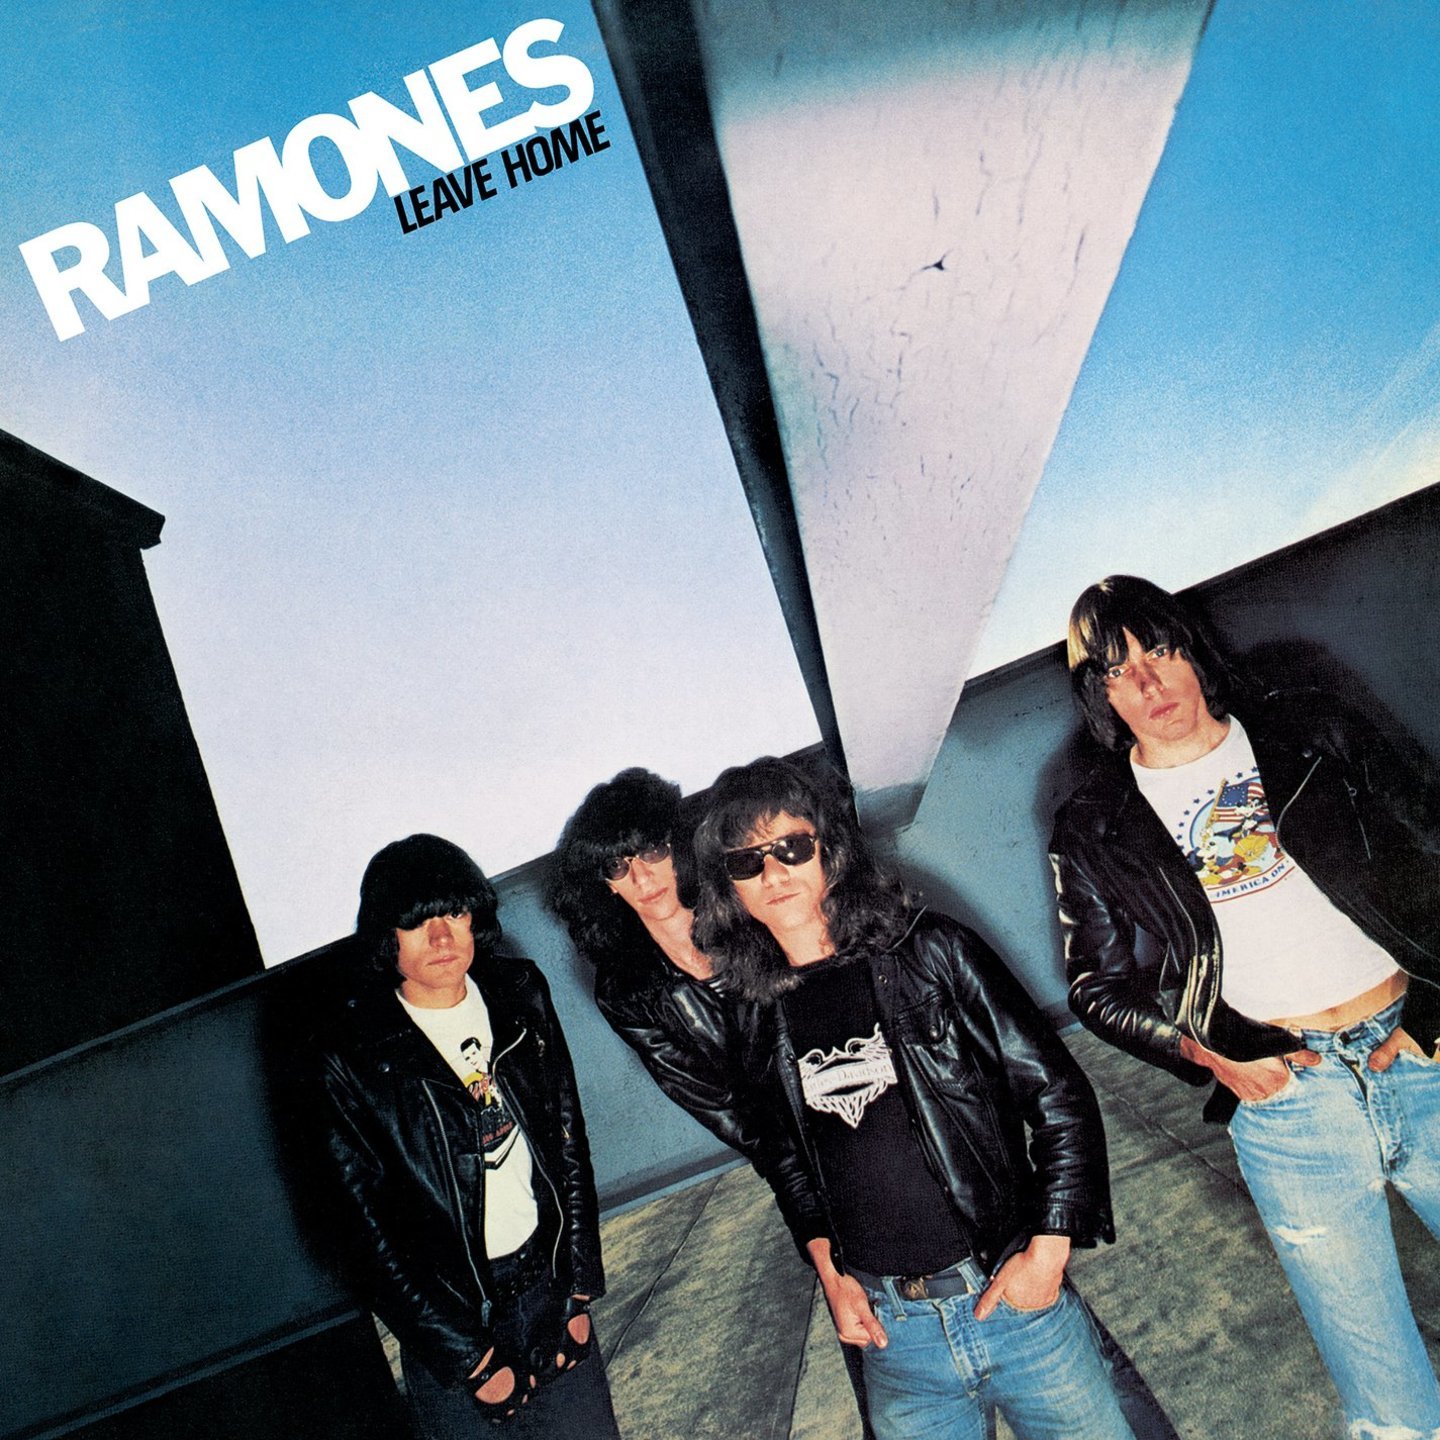 RAMONES - Leave Home LP 180gram Vinyl